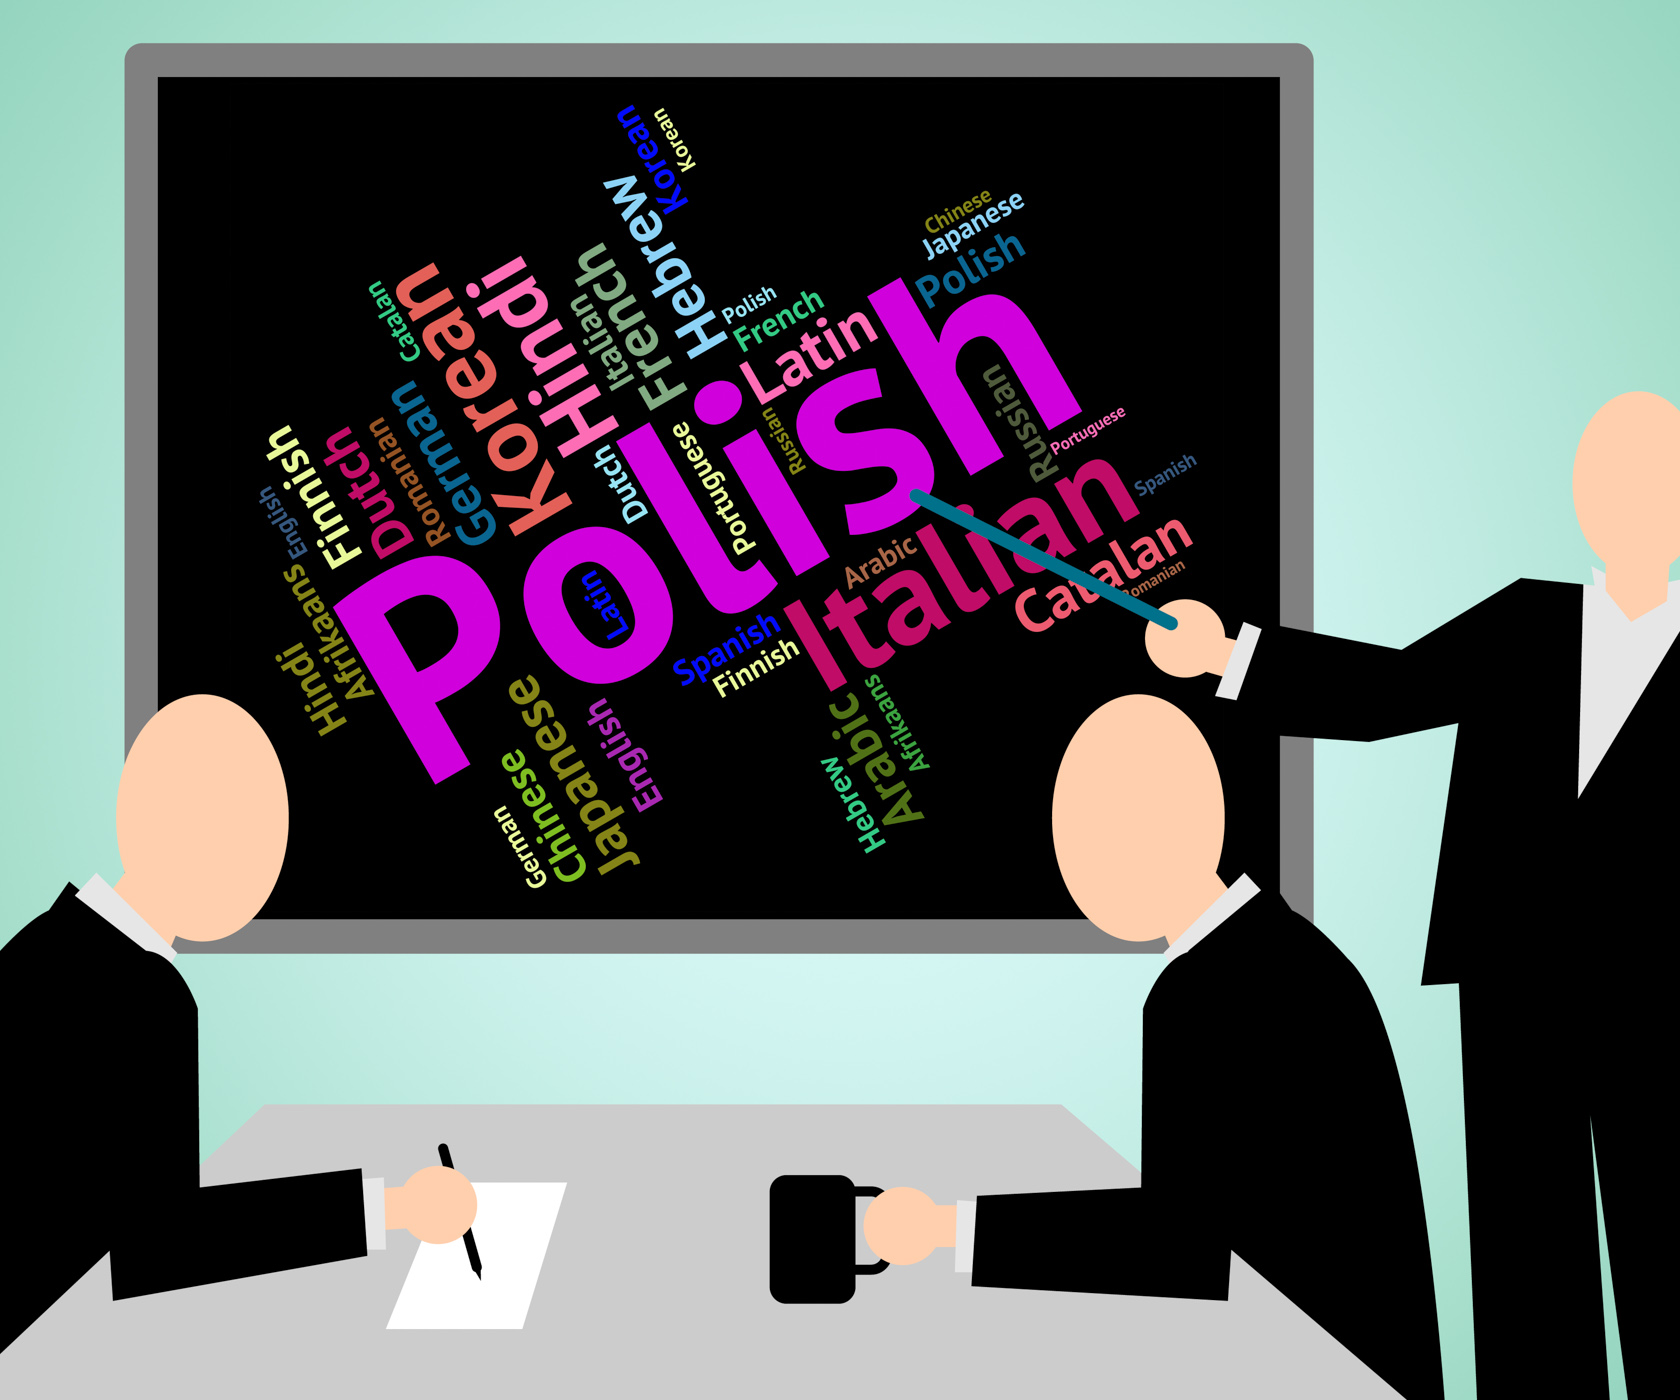 Polish language means translate lingo and poland photo